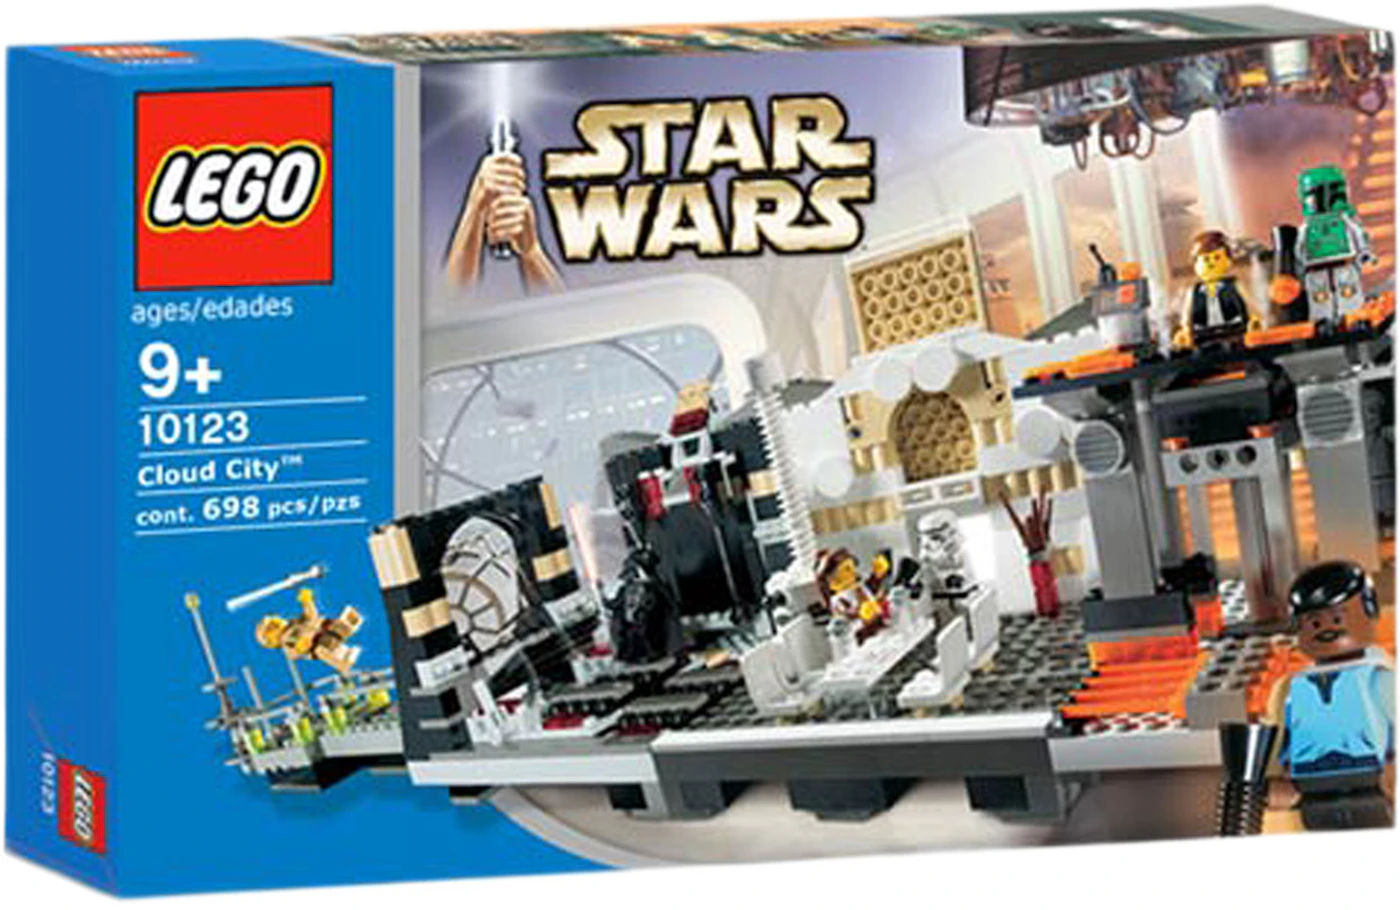 LEGO Star Wars C-3PO Set 8007 - US